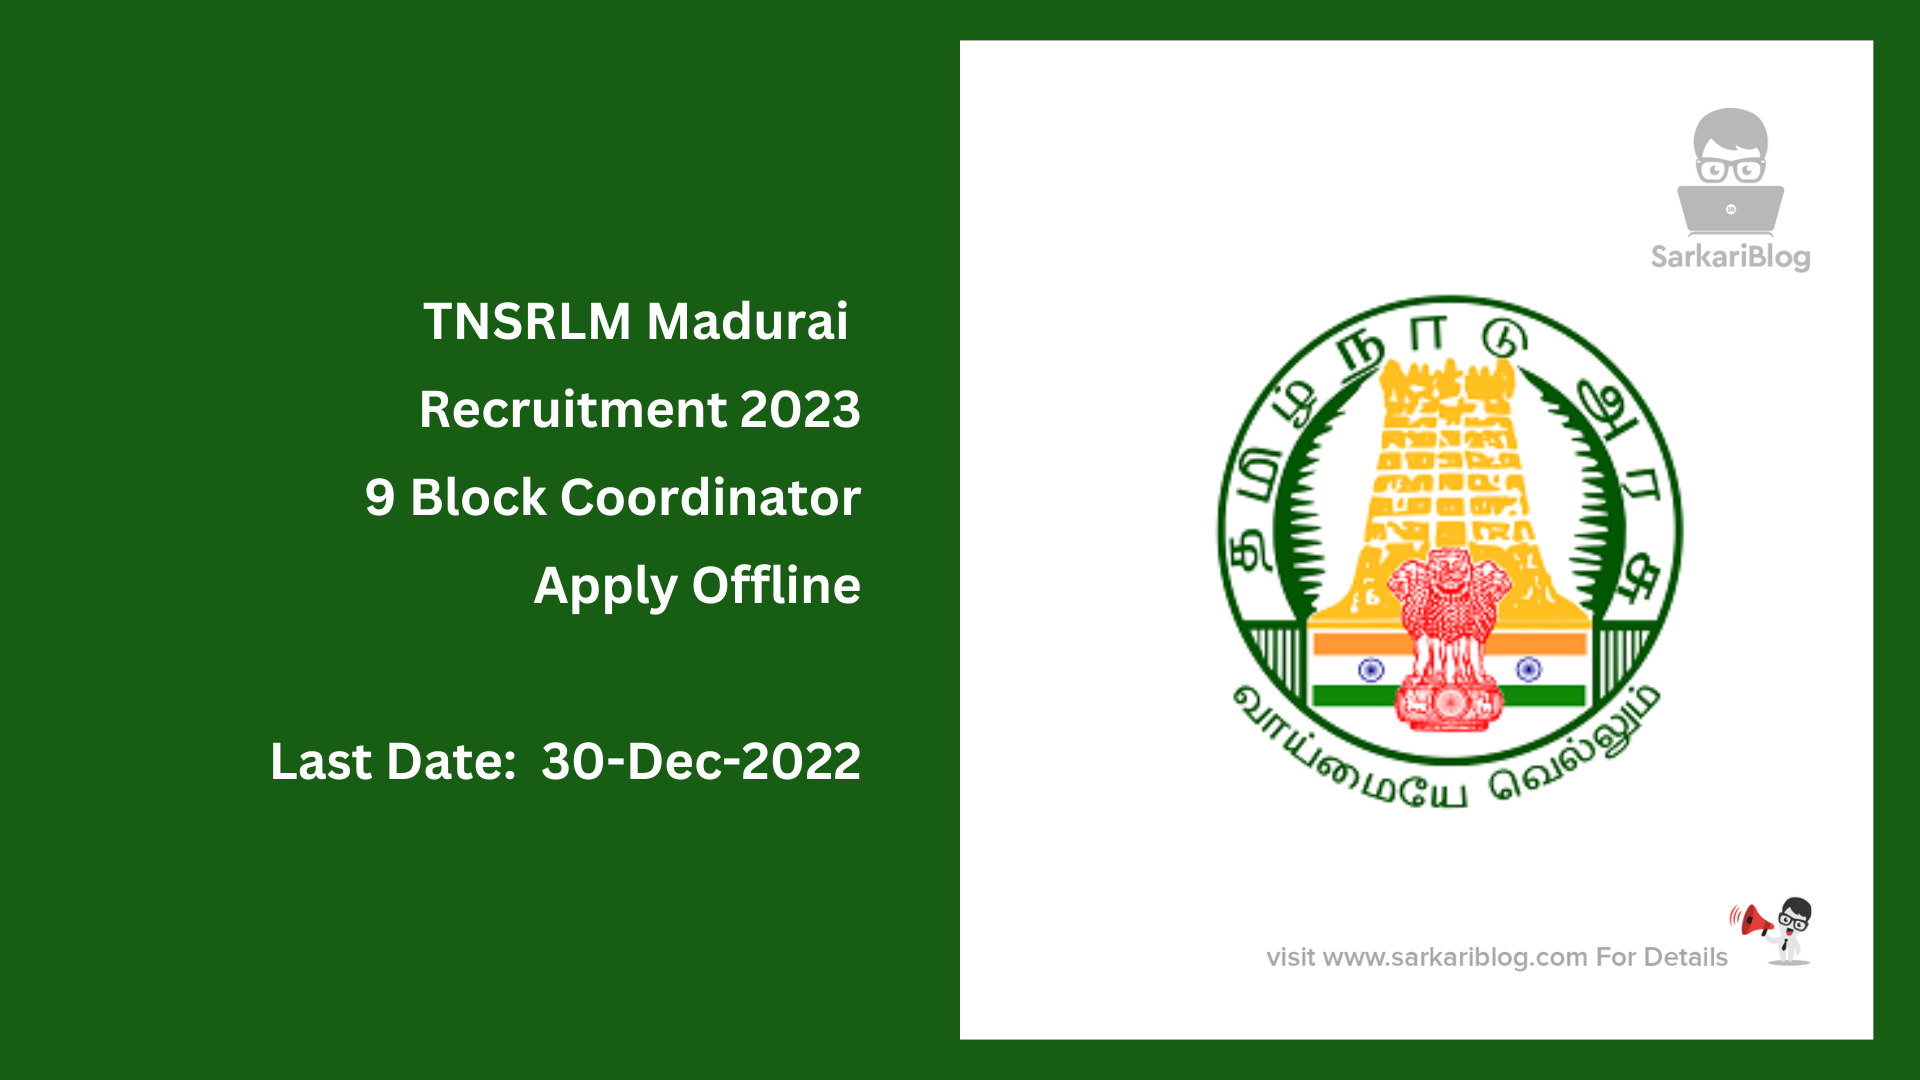 TNSRLM Madurai Recruitment 2023